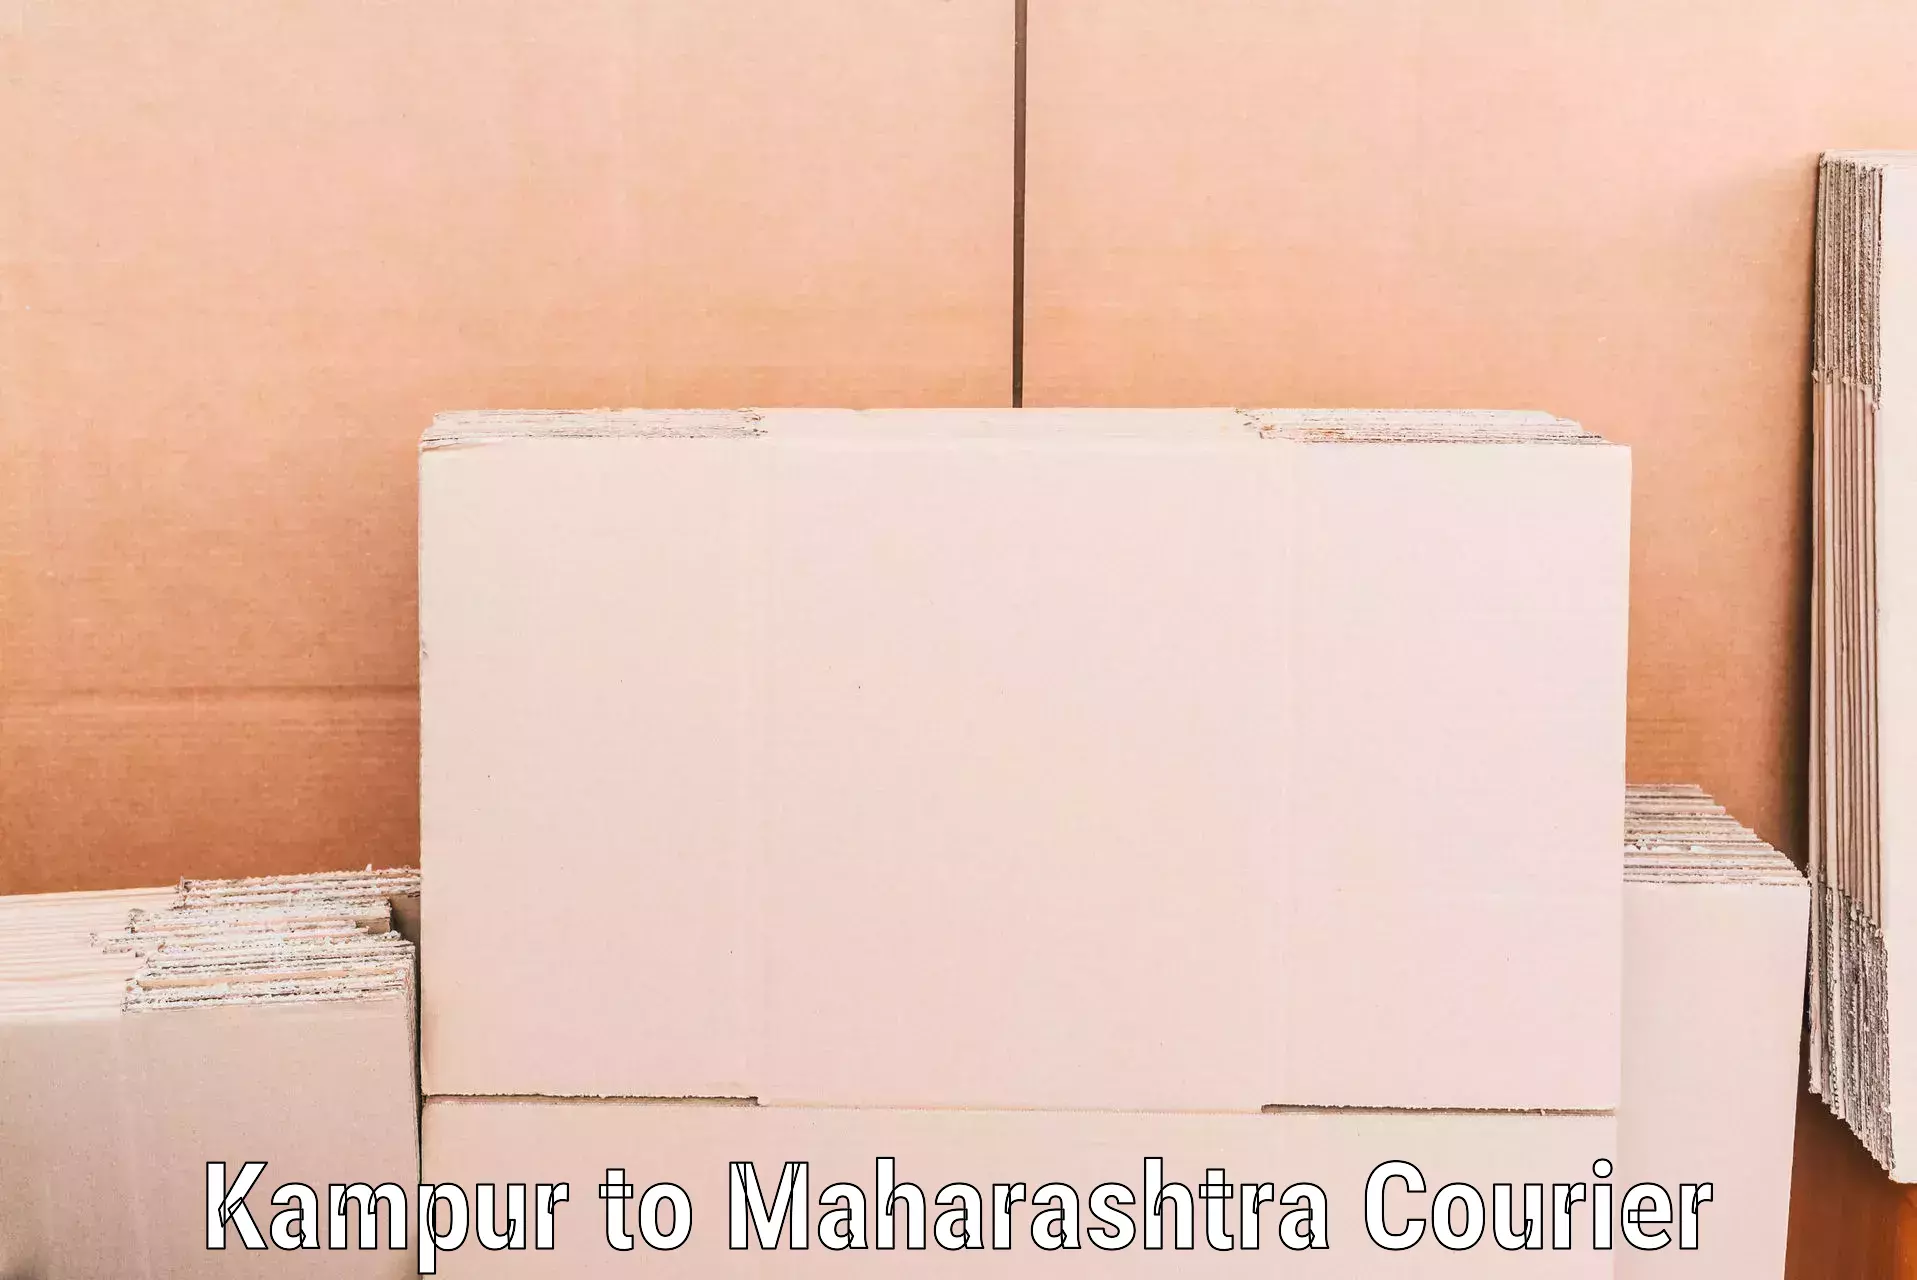 Professional moving company Kampur to Maharashtra